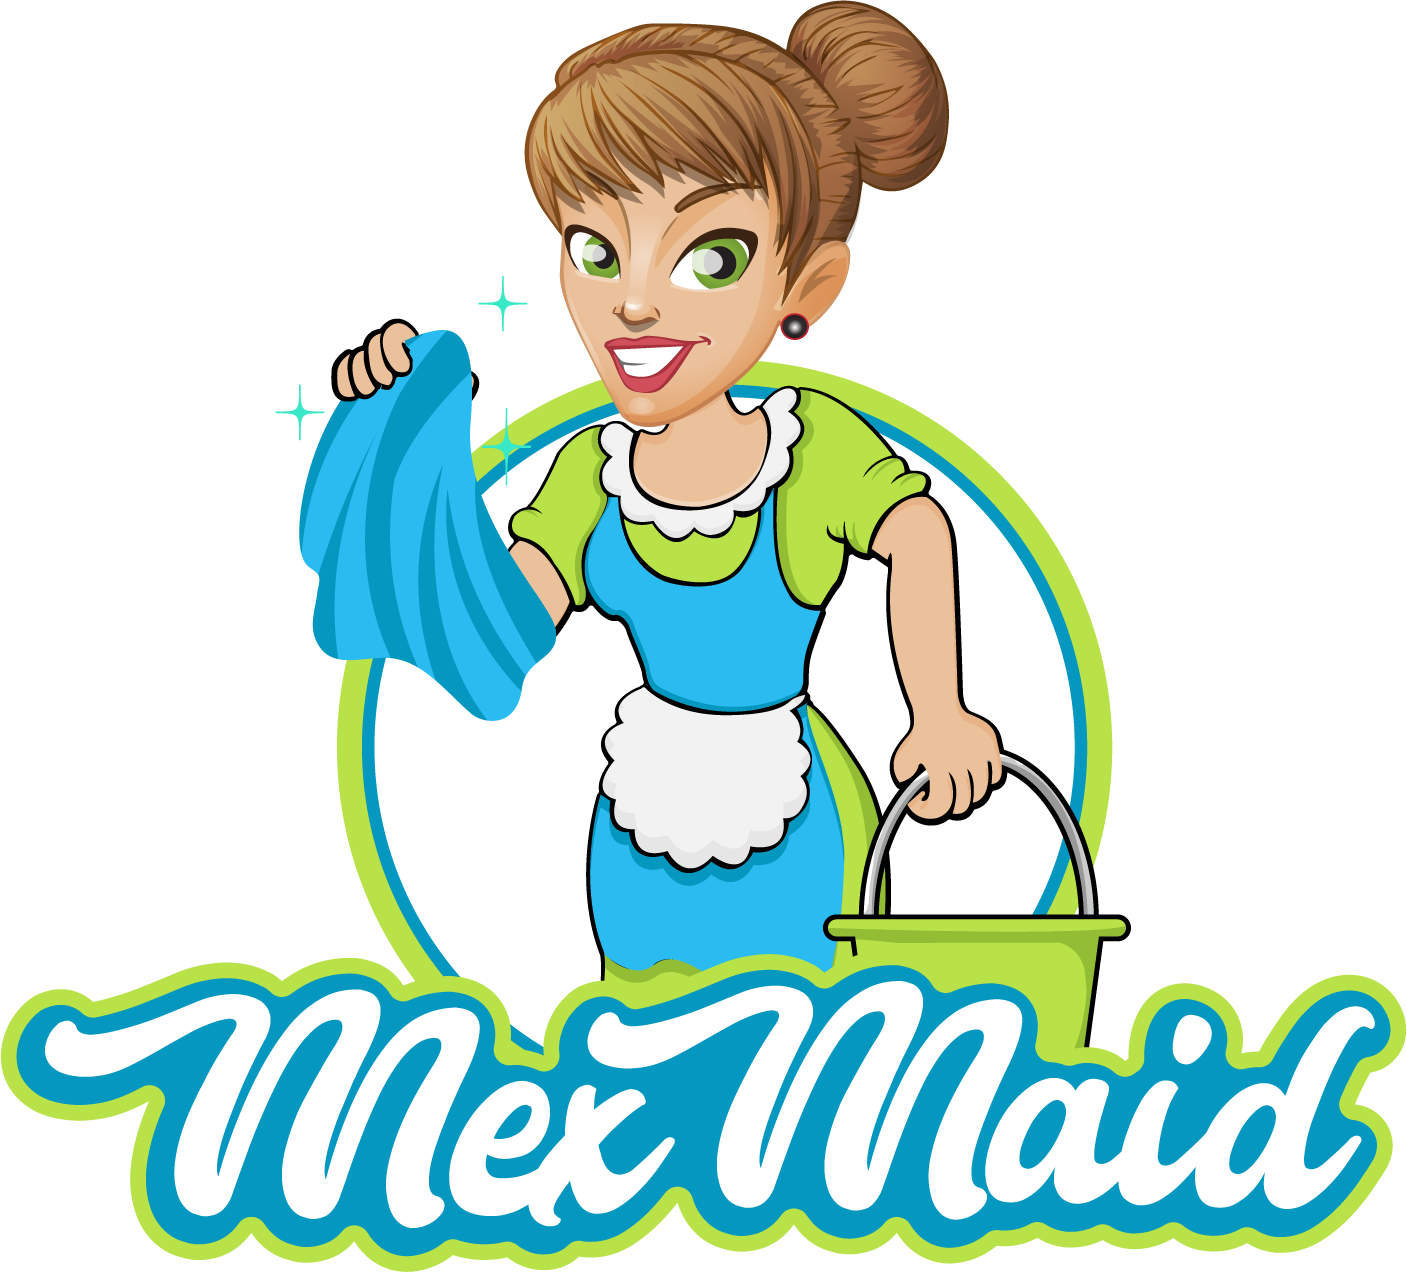 Mex Maid Mex Maid - Maid Service (1407x1272)